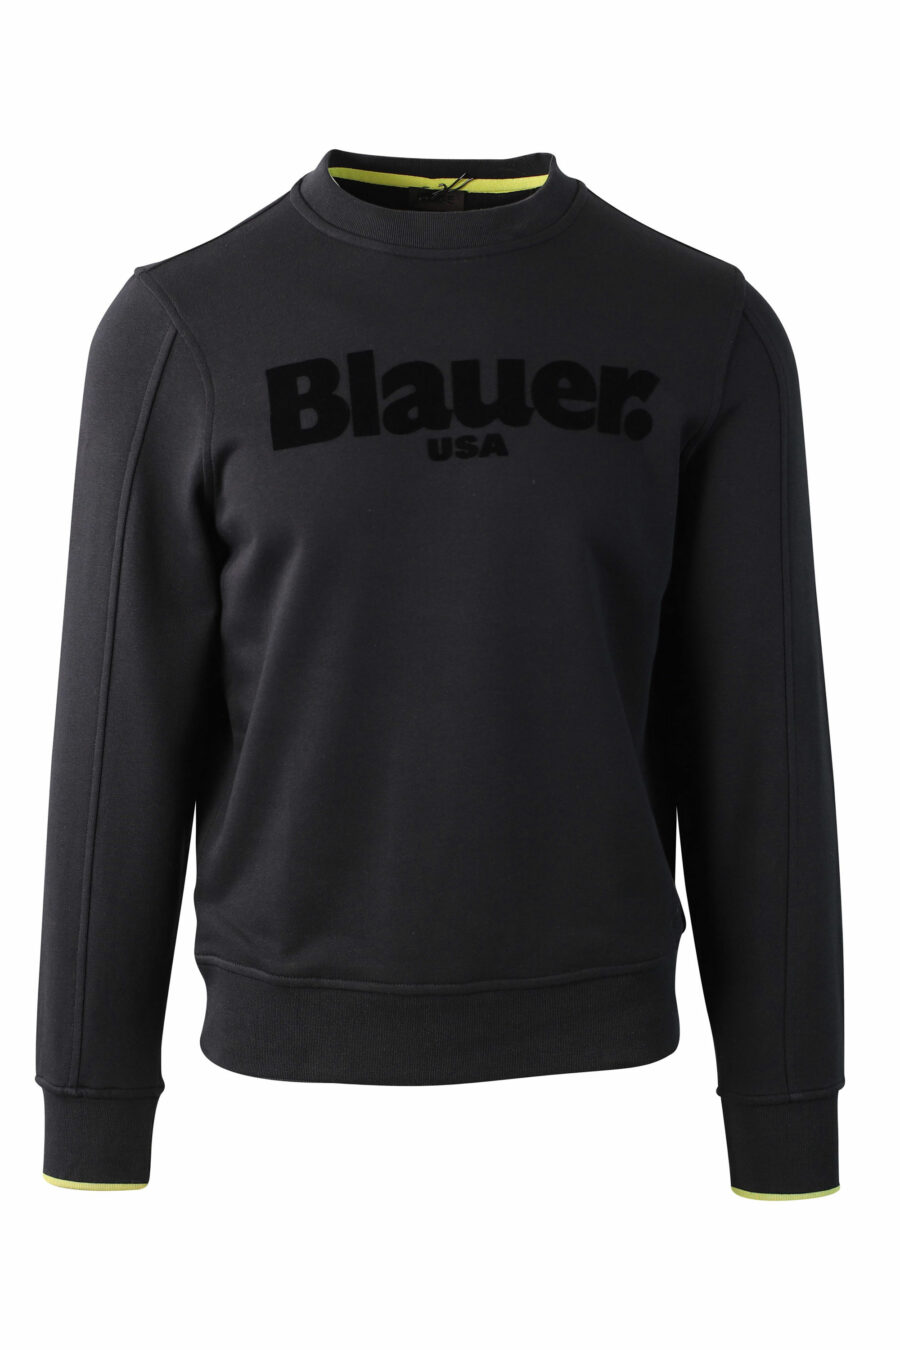 Black sweatshirt with monochrome velvet maxilogue - IMG 0030 1